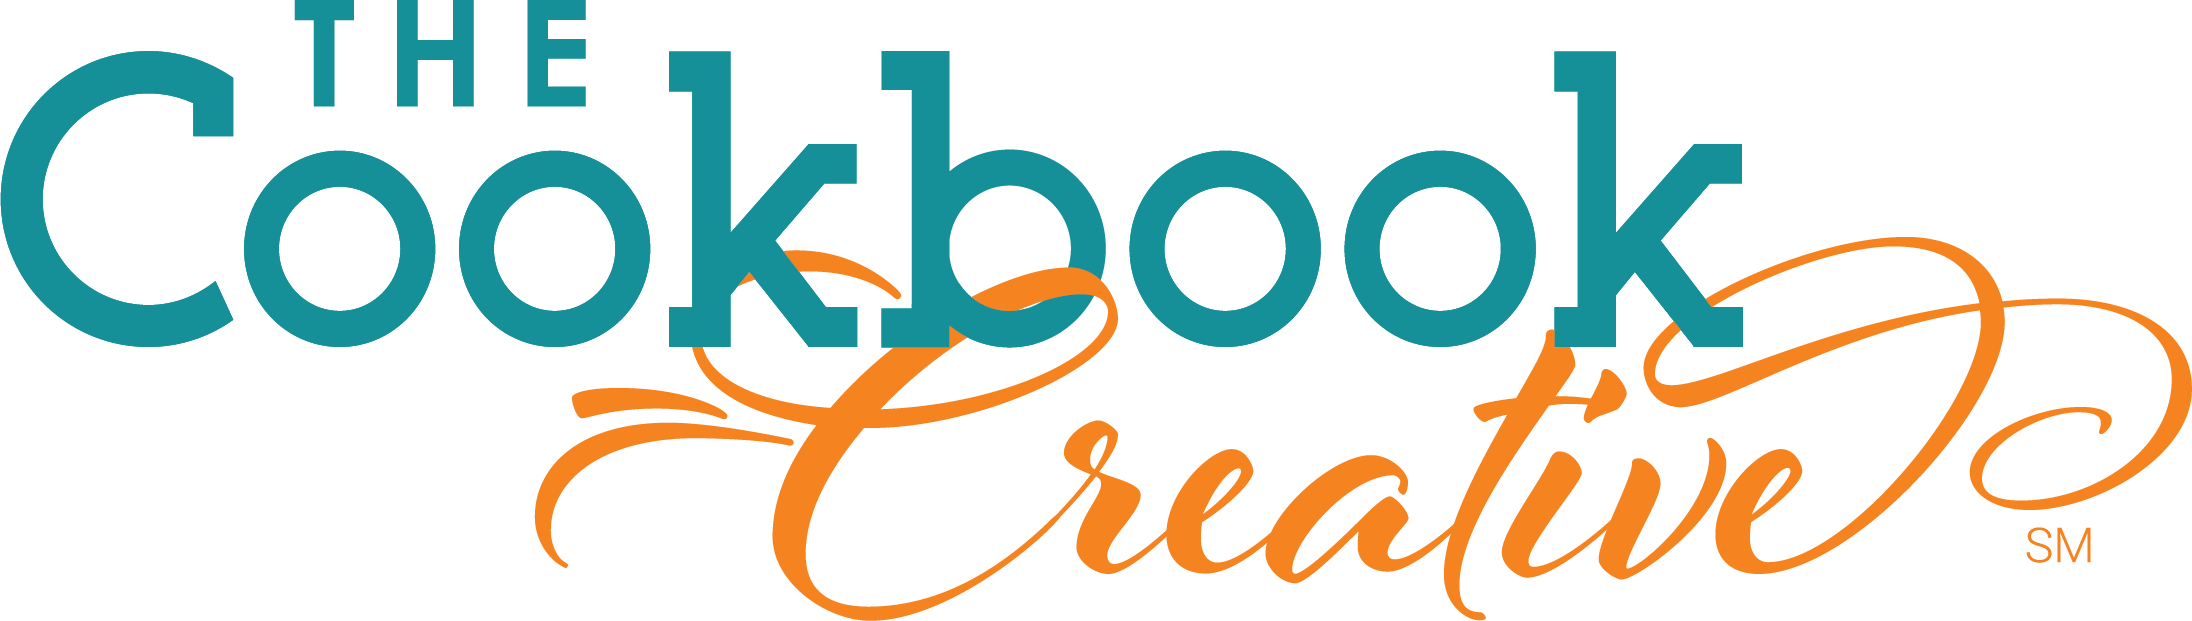 The Cookbook Creative Logo